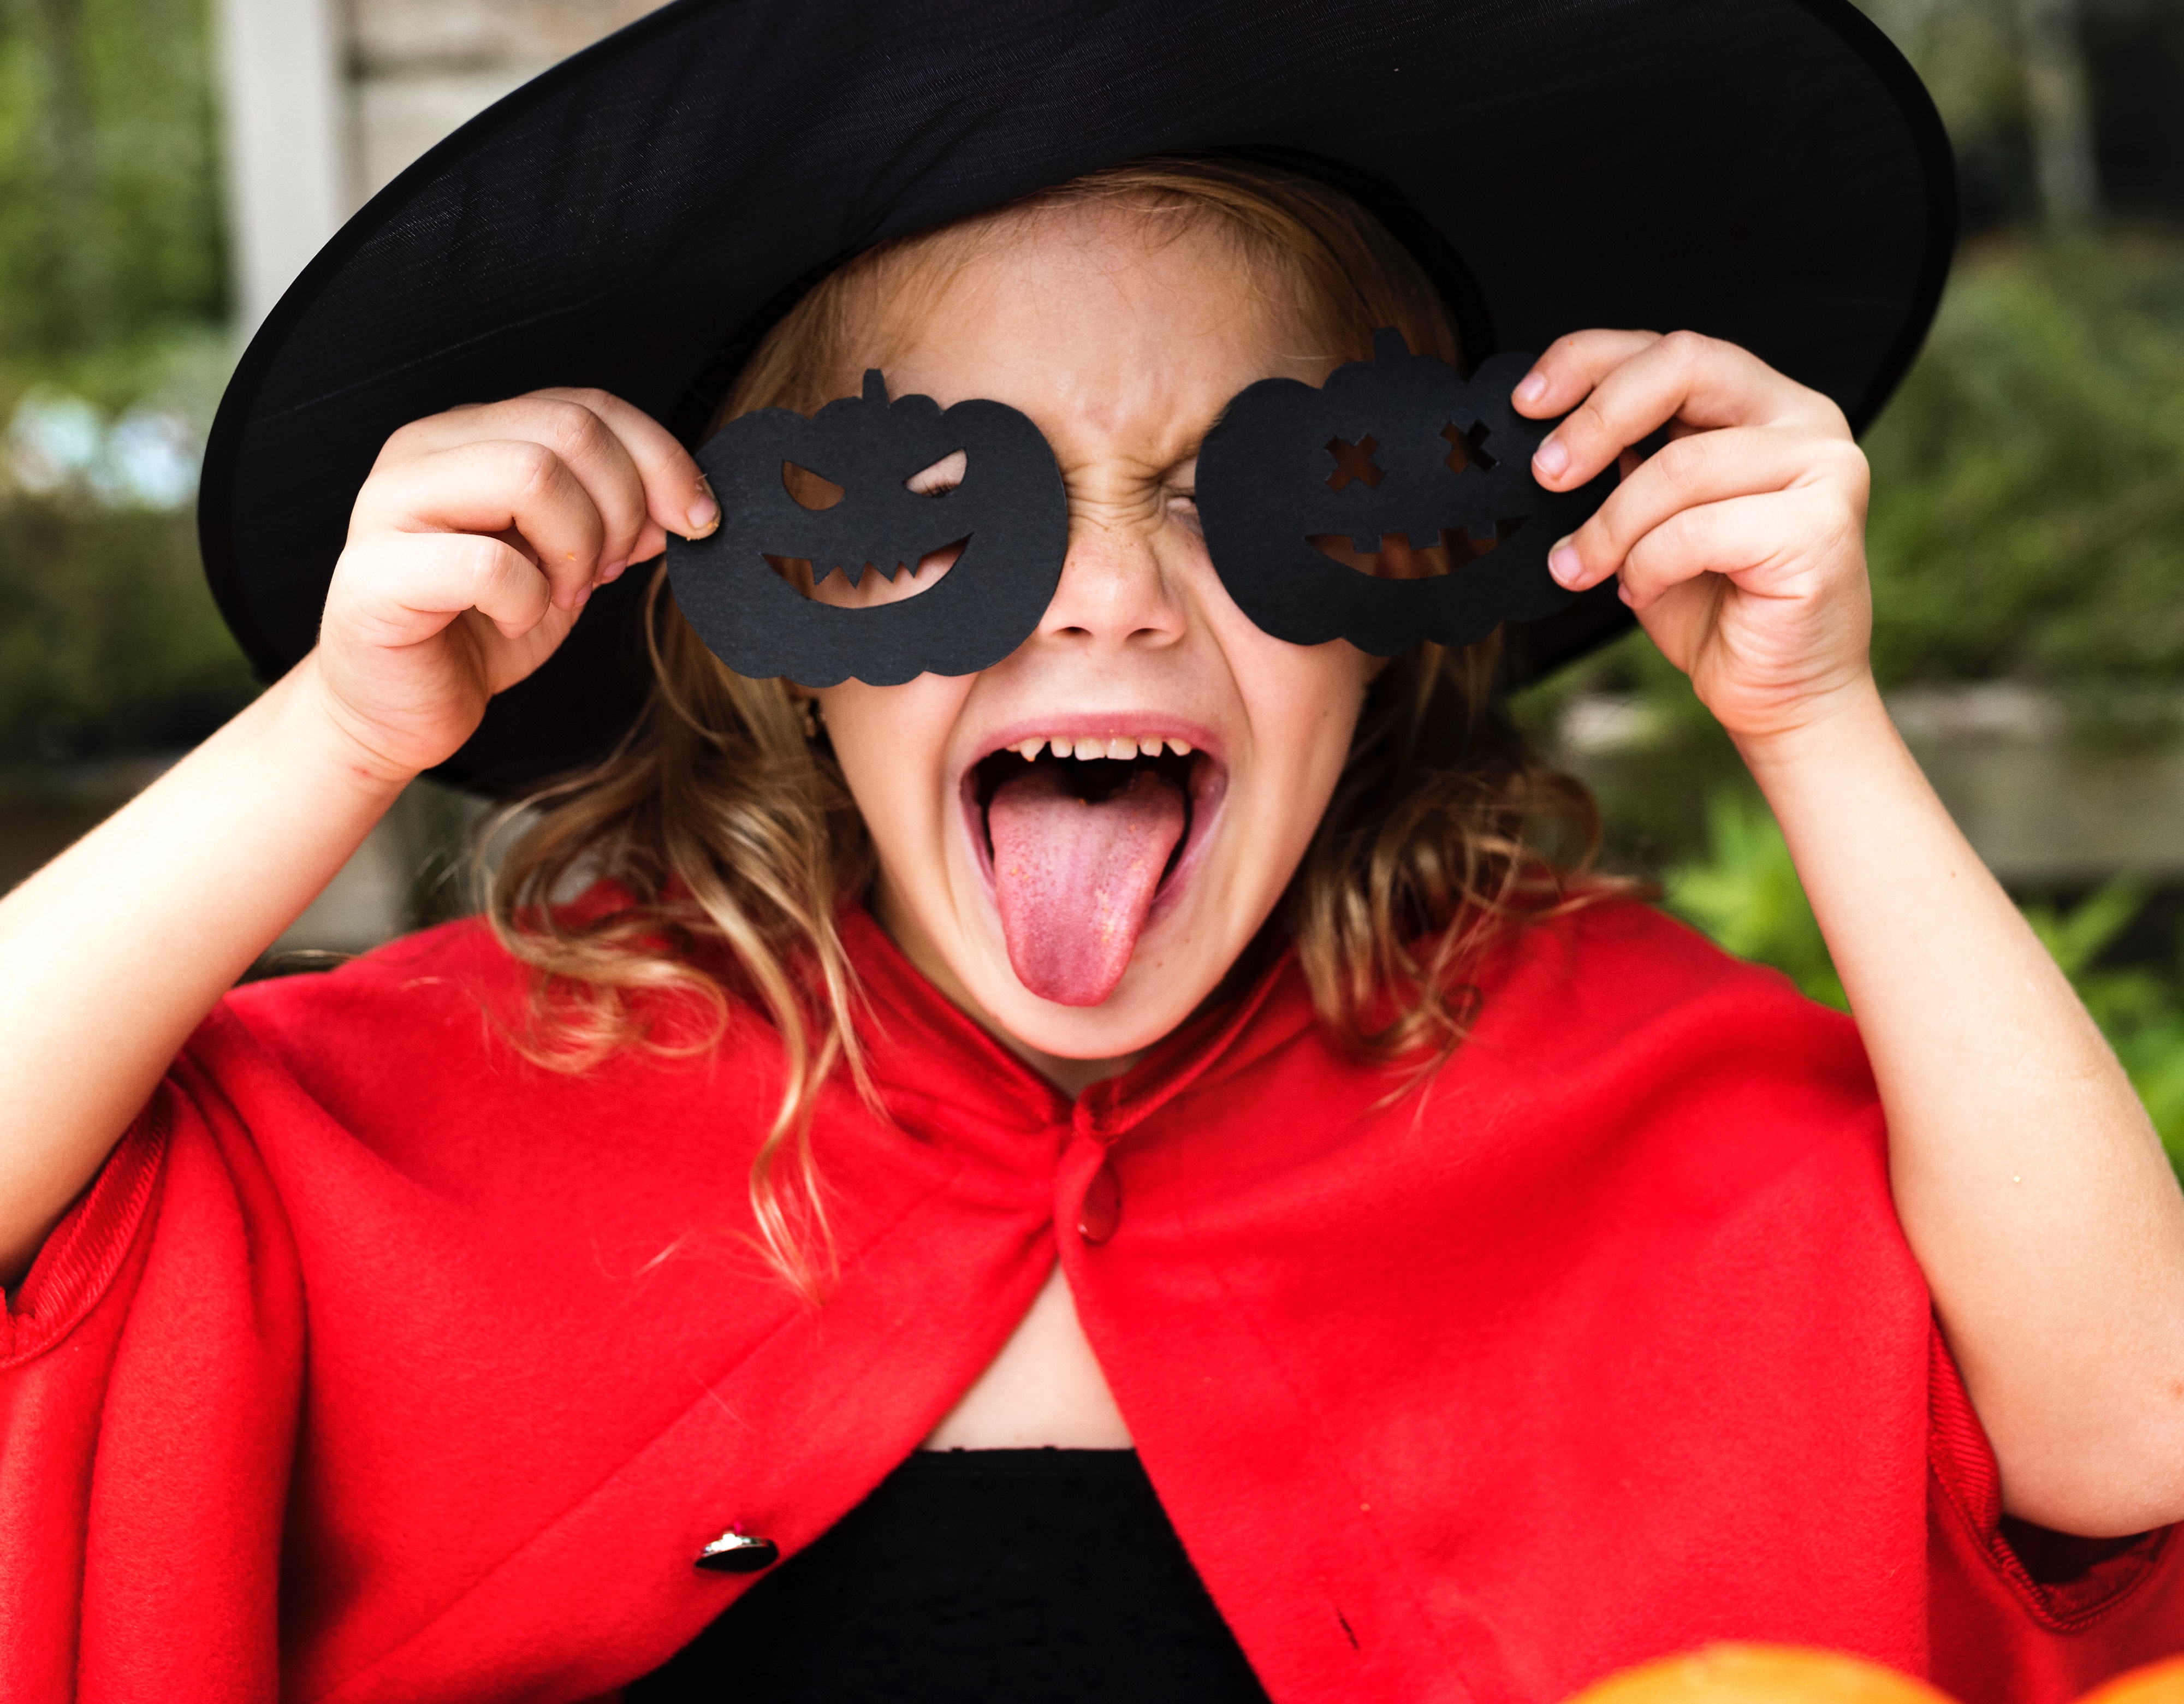 A girl wearing Halloween costume